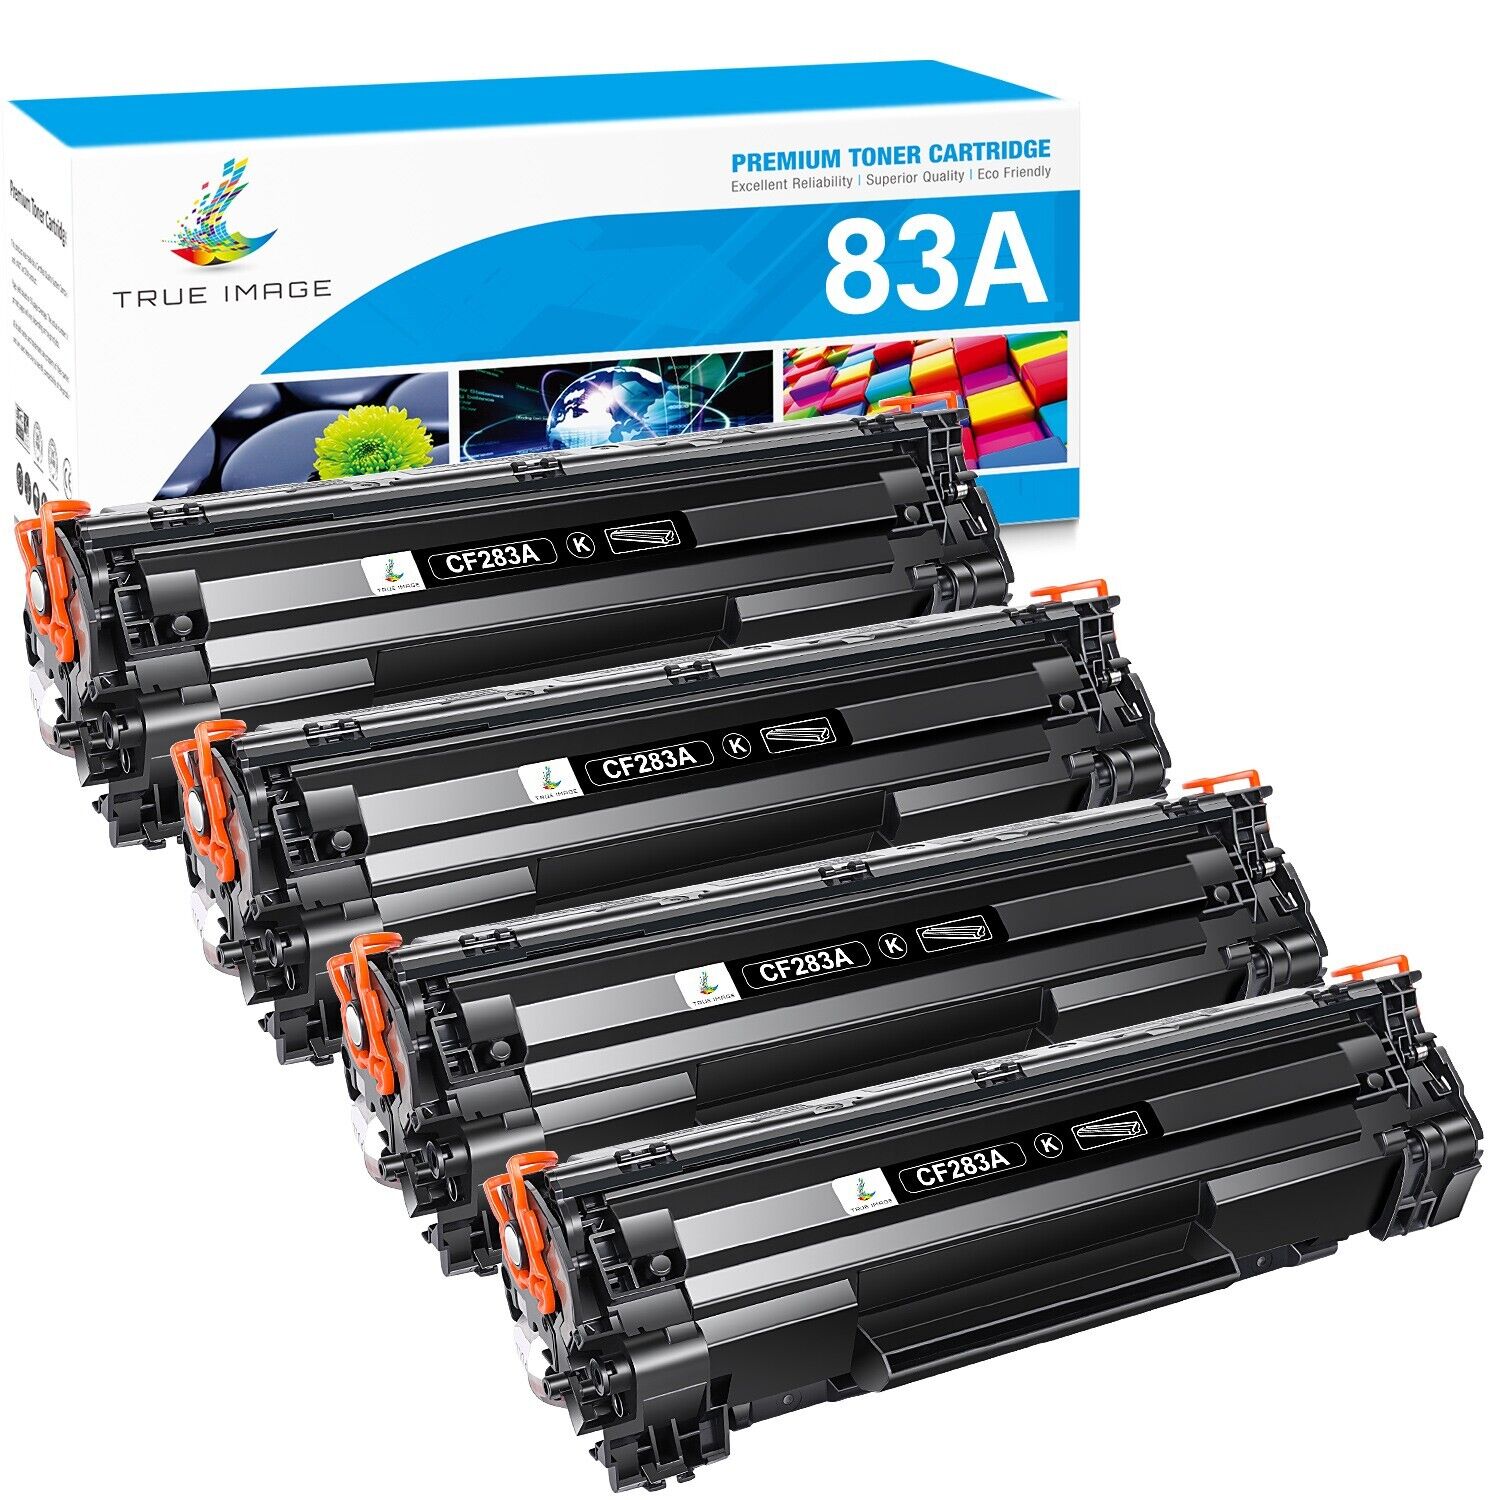 4 Black 83A CF283A Toner Cartridges For HP LaserJet Pro M127fn M127fw M125nw MFP